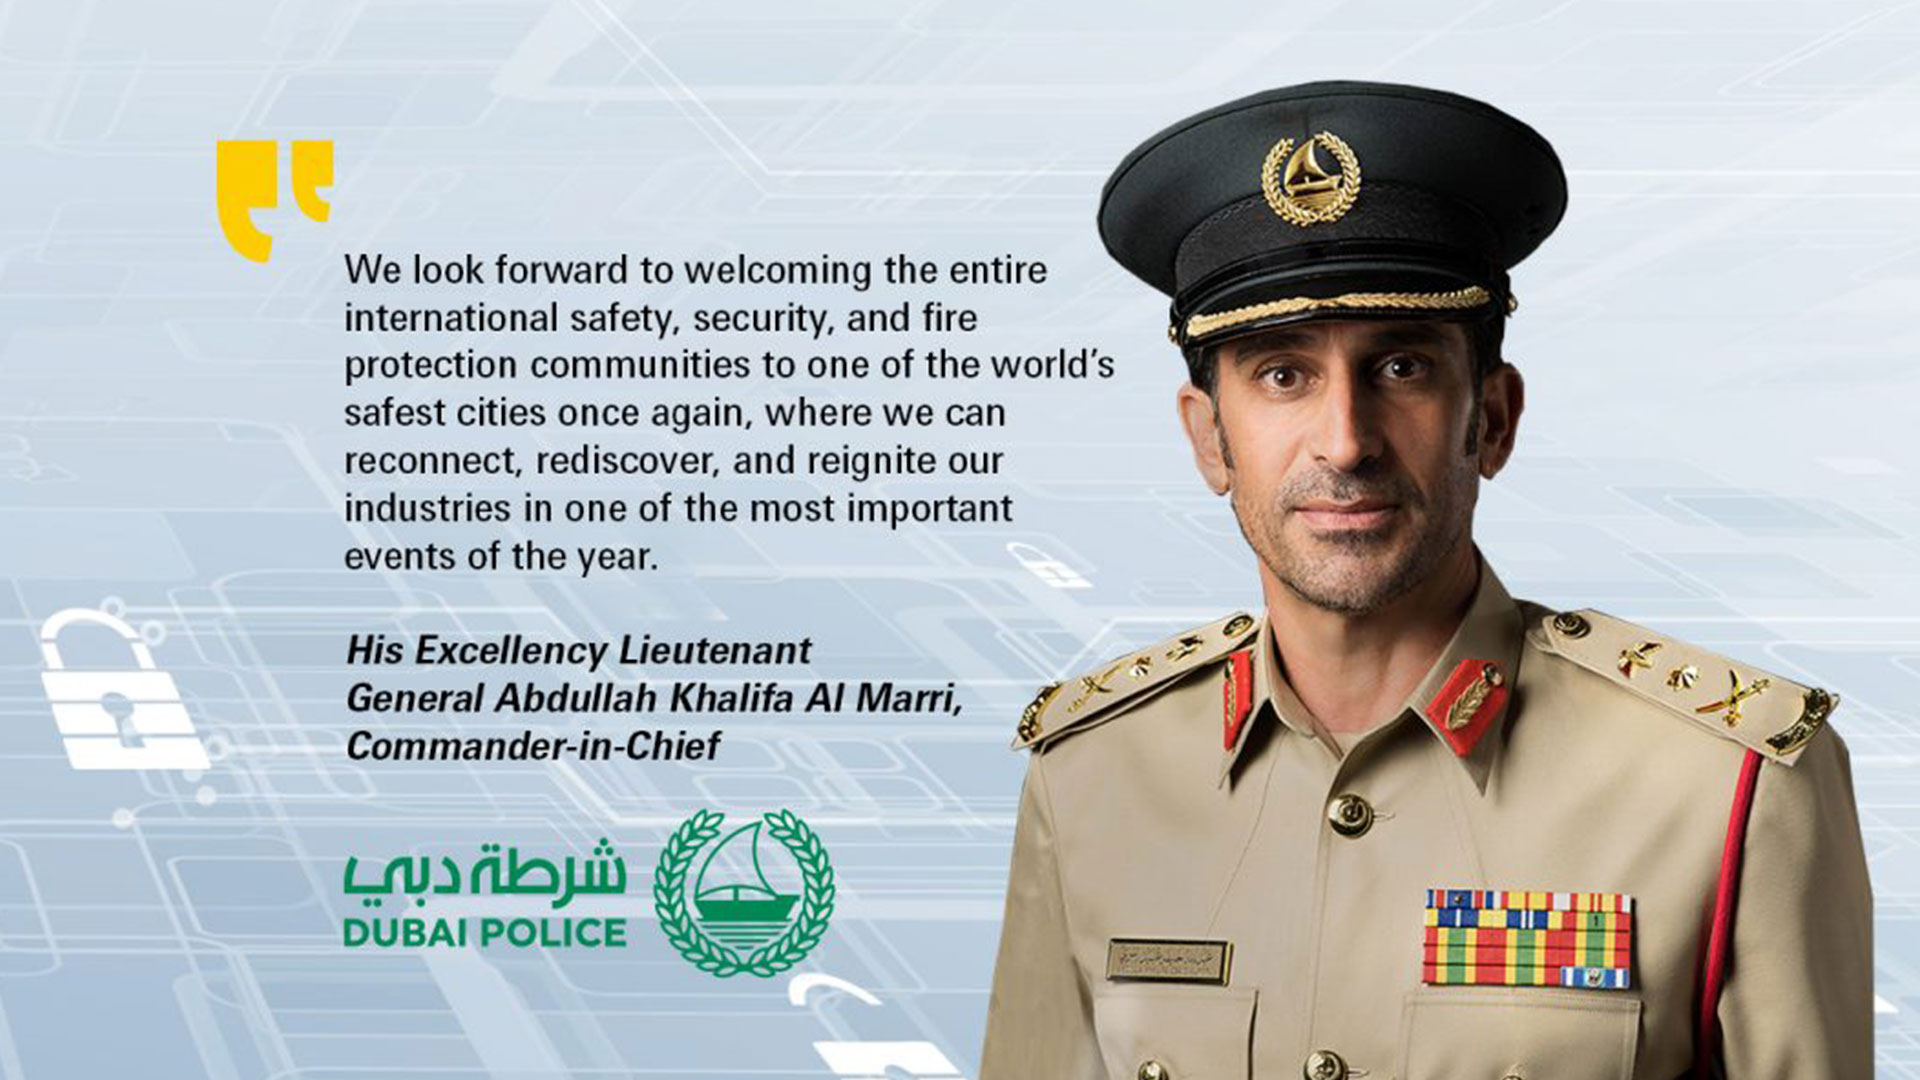 His Excellency Lieutenant General Abdullah Khalifa Al Marri